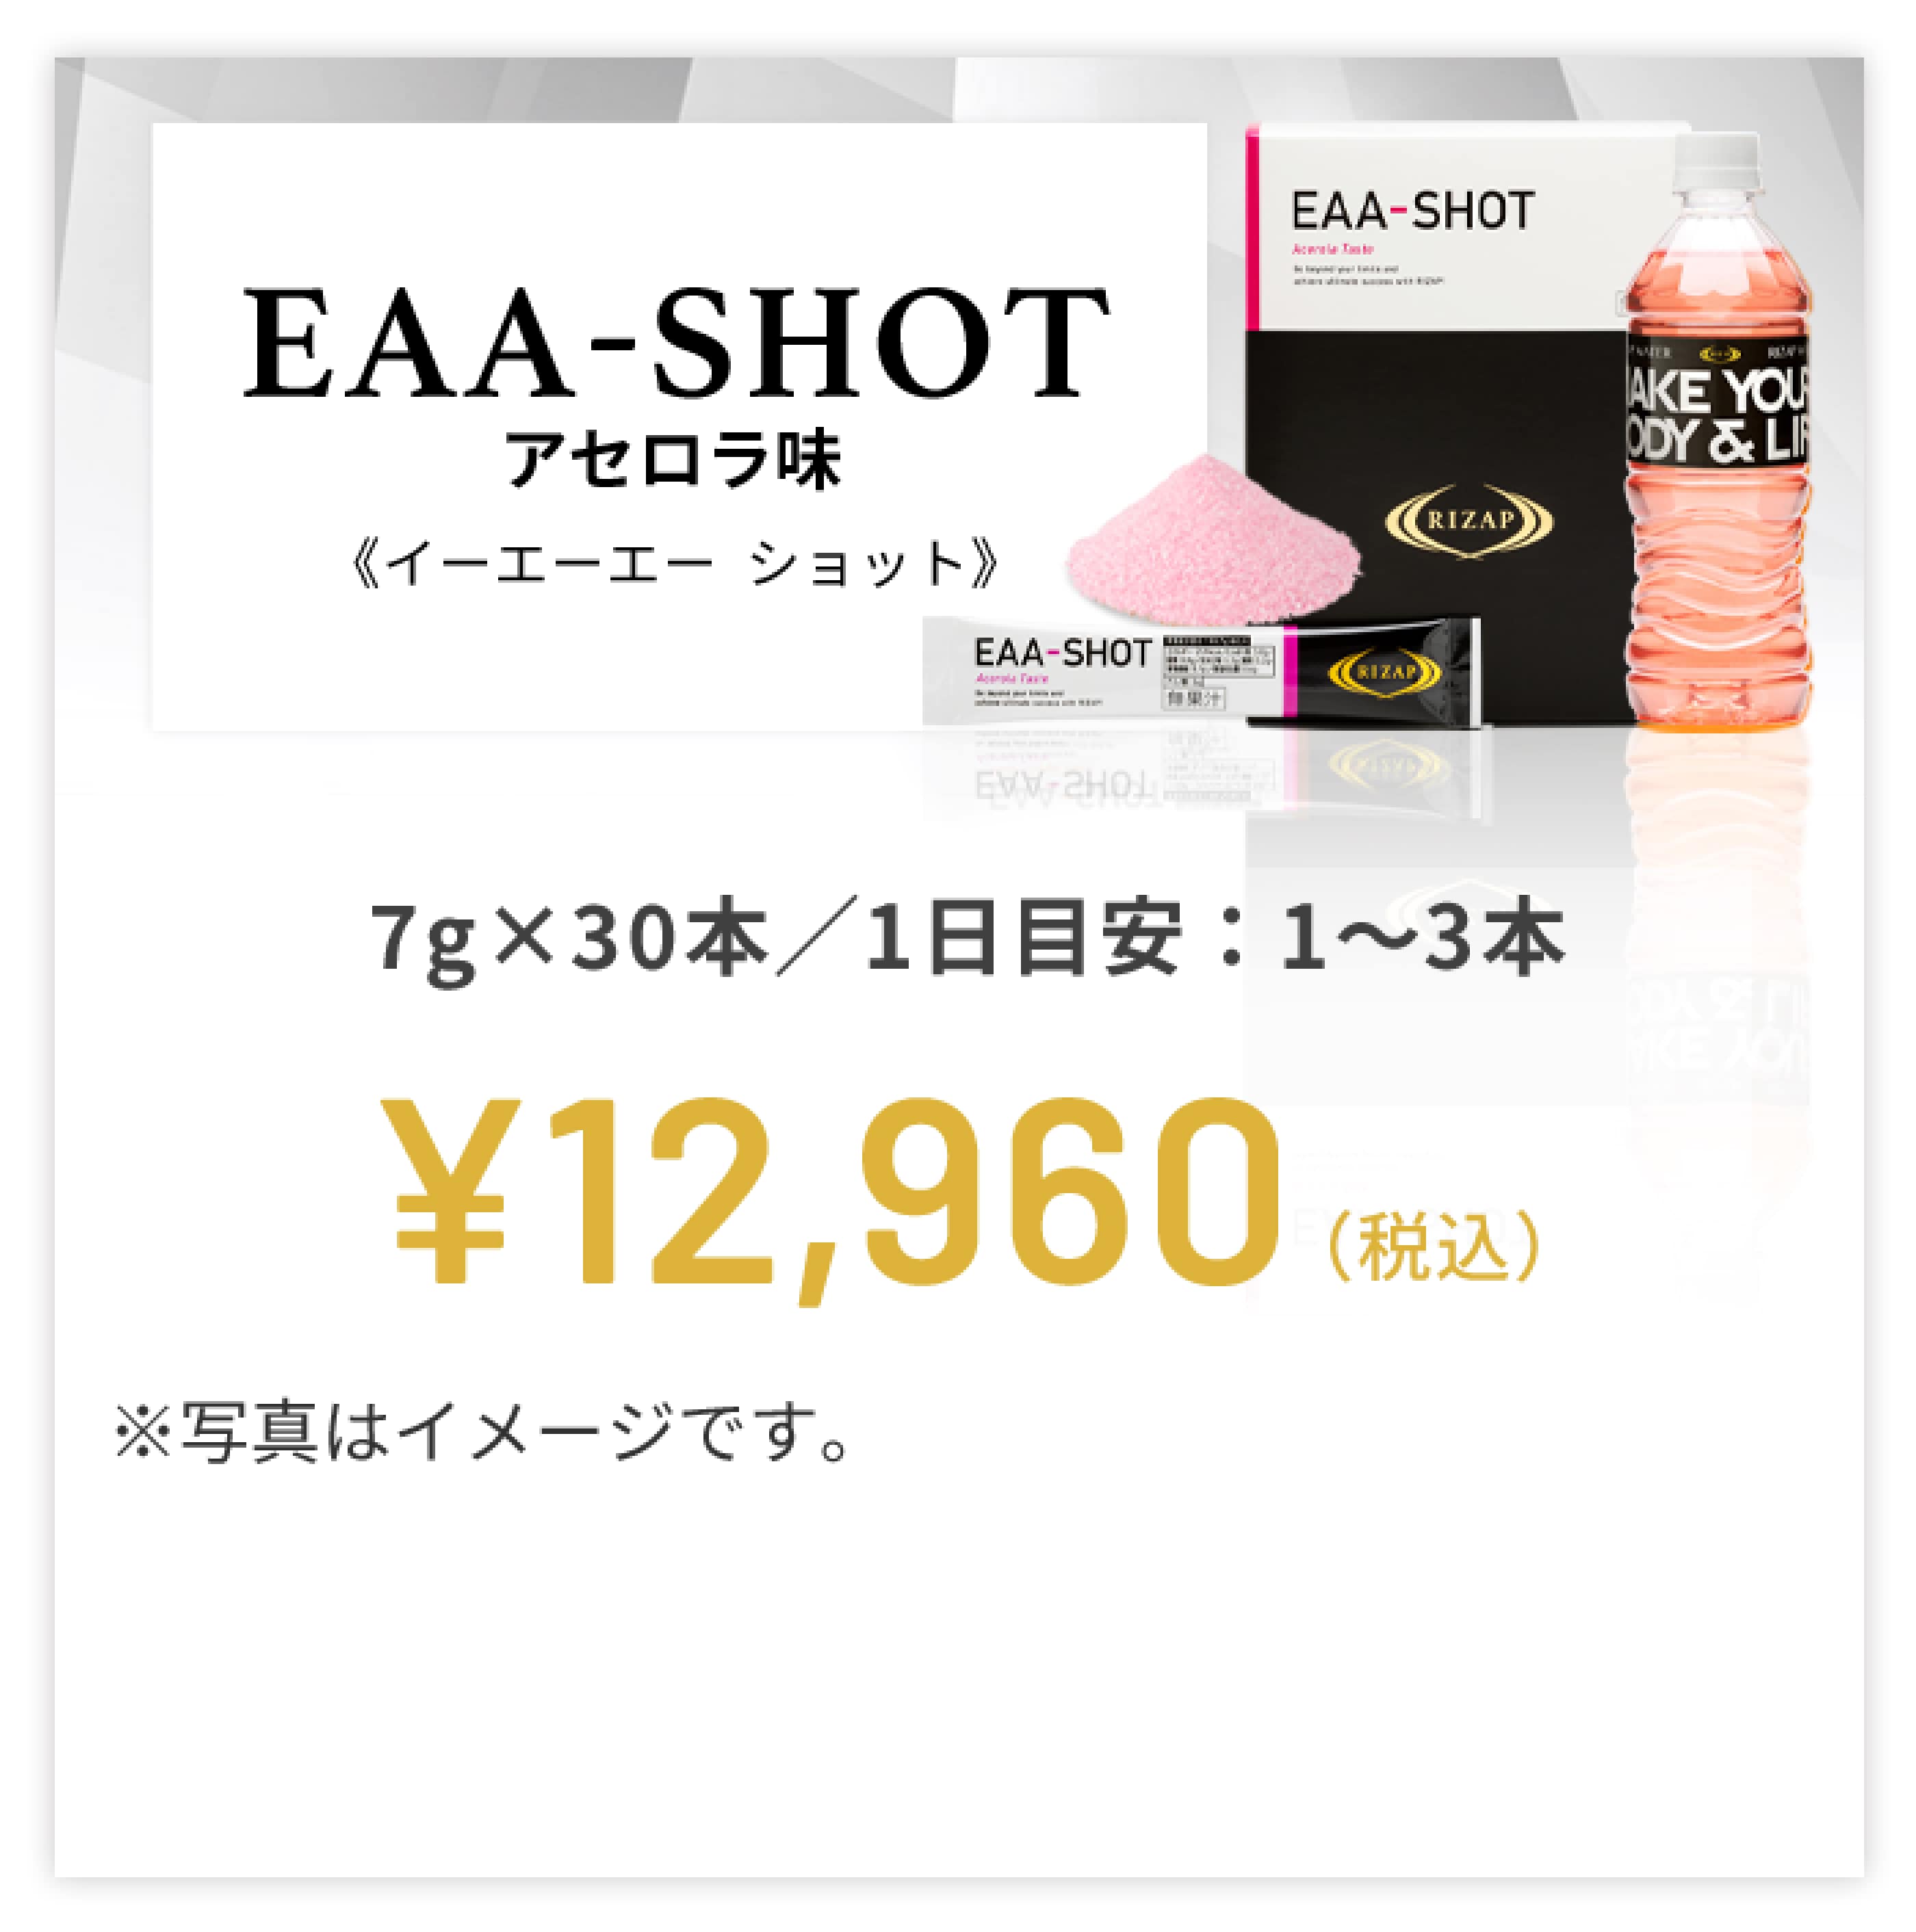 EAA-SHOT アセロラ味 | サプリメント | ライザップ公式通販 RIZAP 